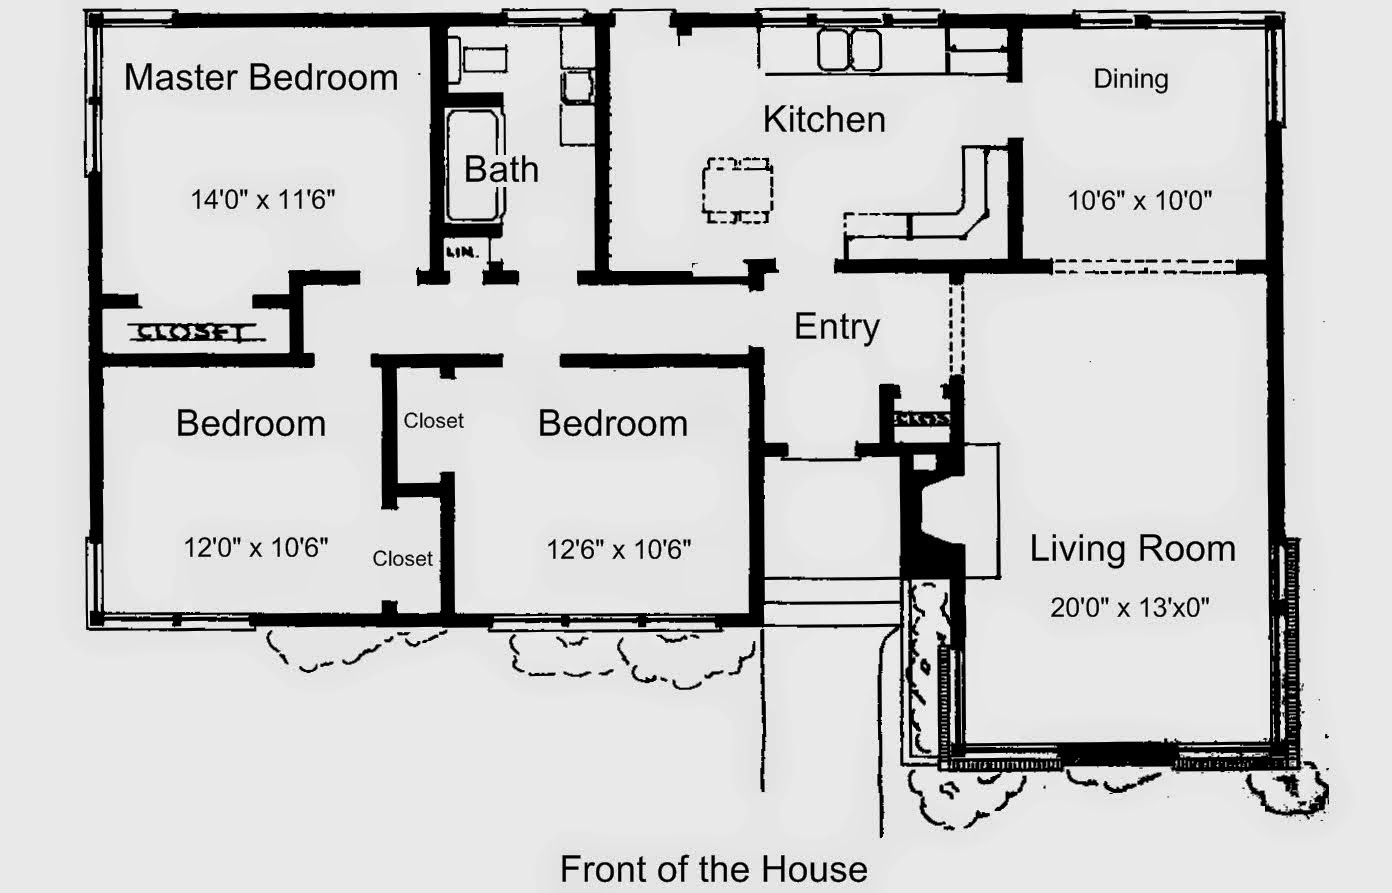  Bedroom Bungalow Floor Plan besides Simple 3 Bedroom House Floor Plans